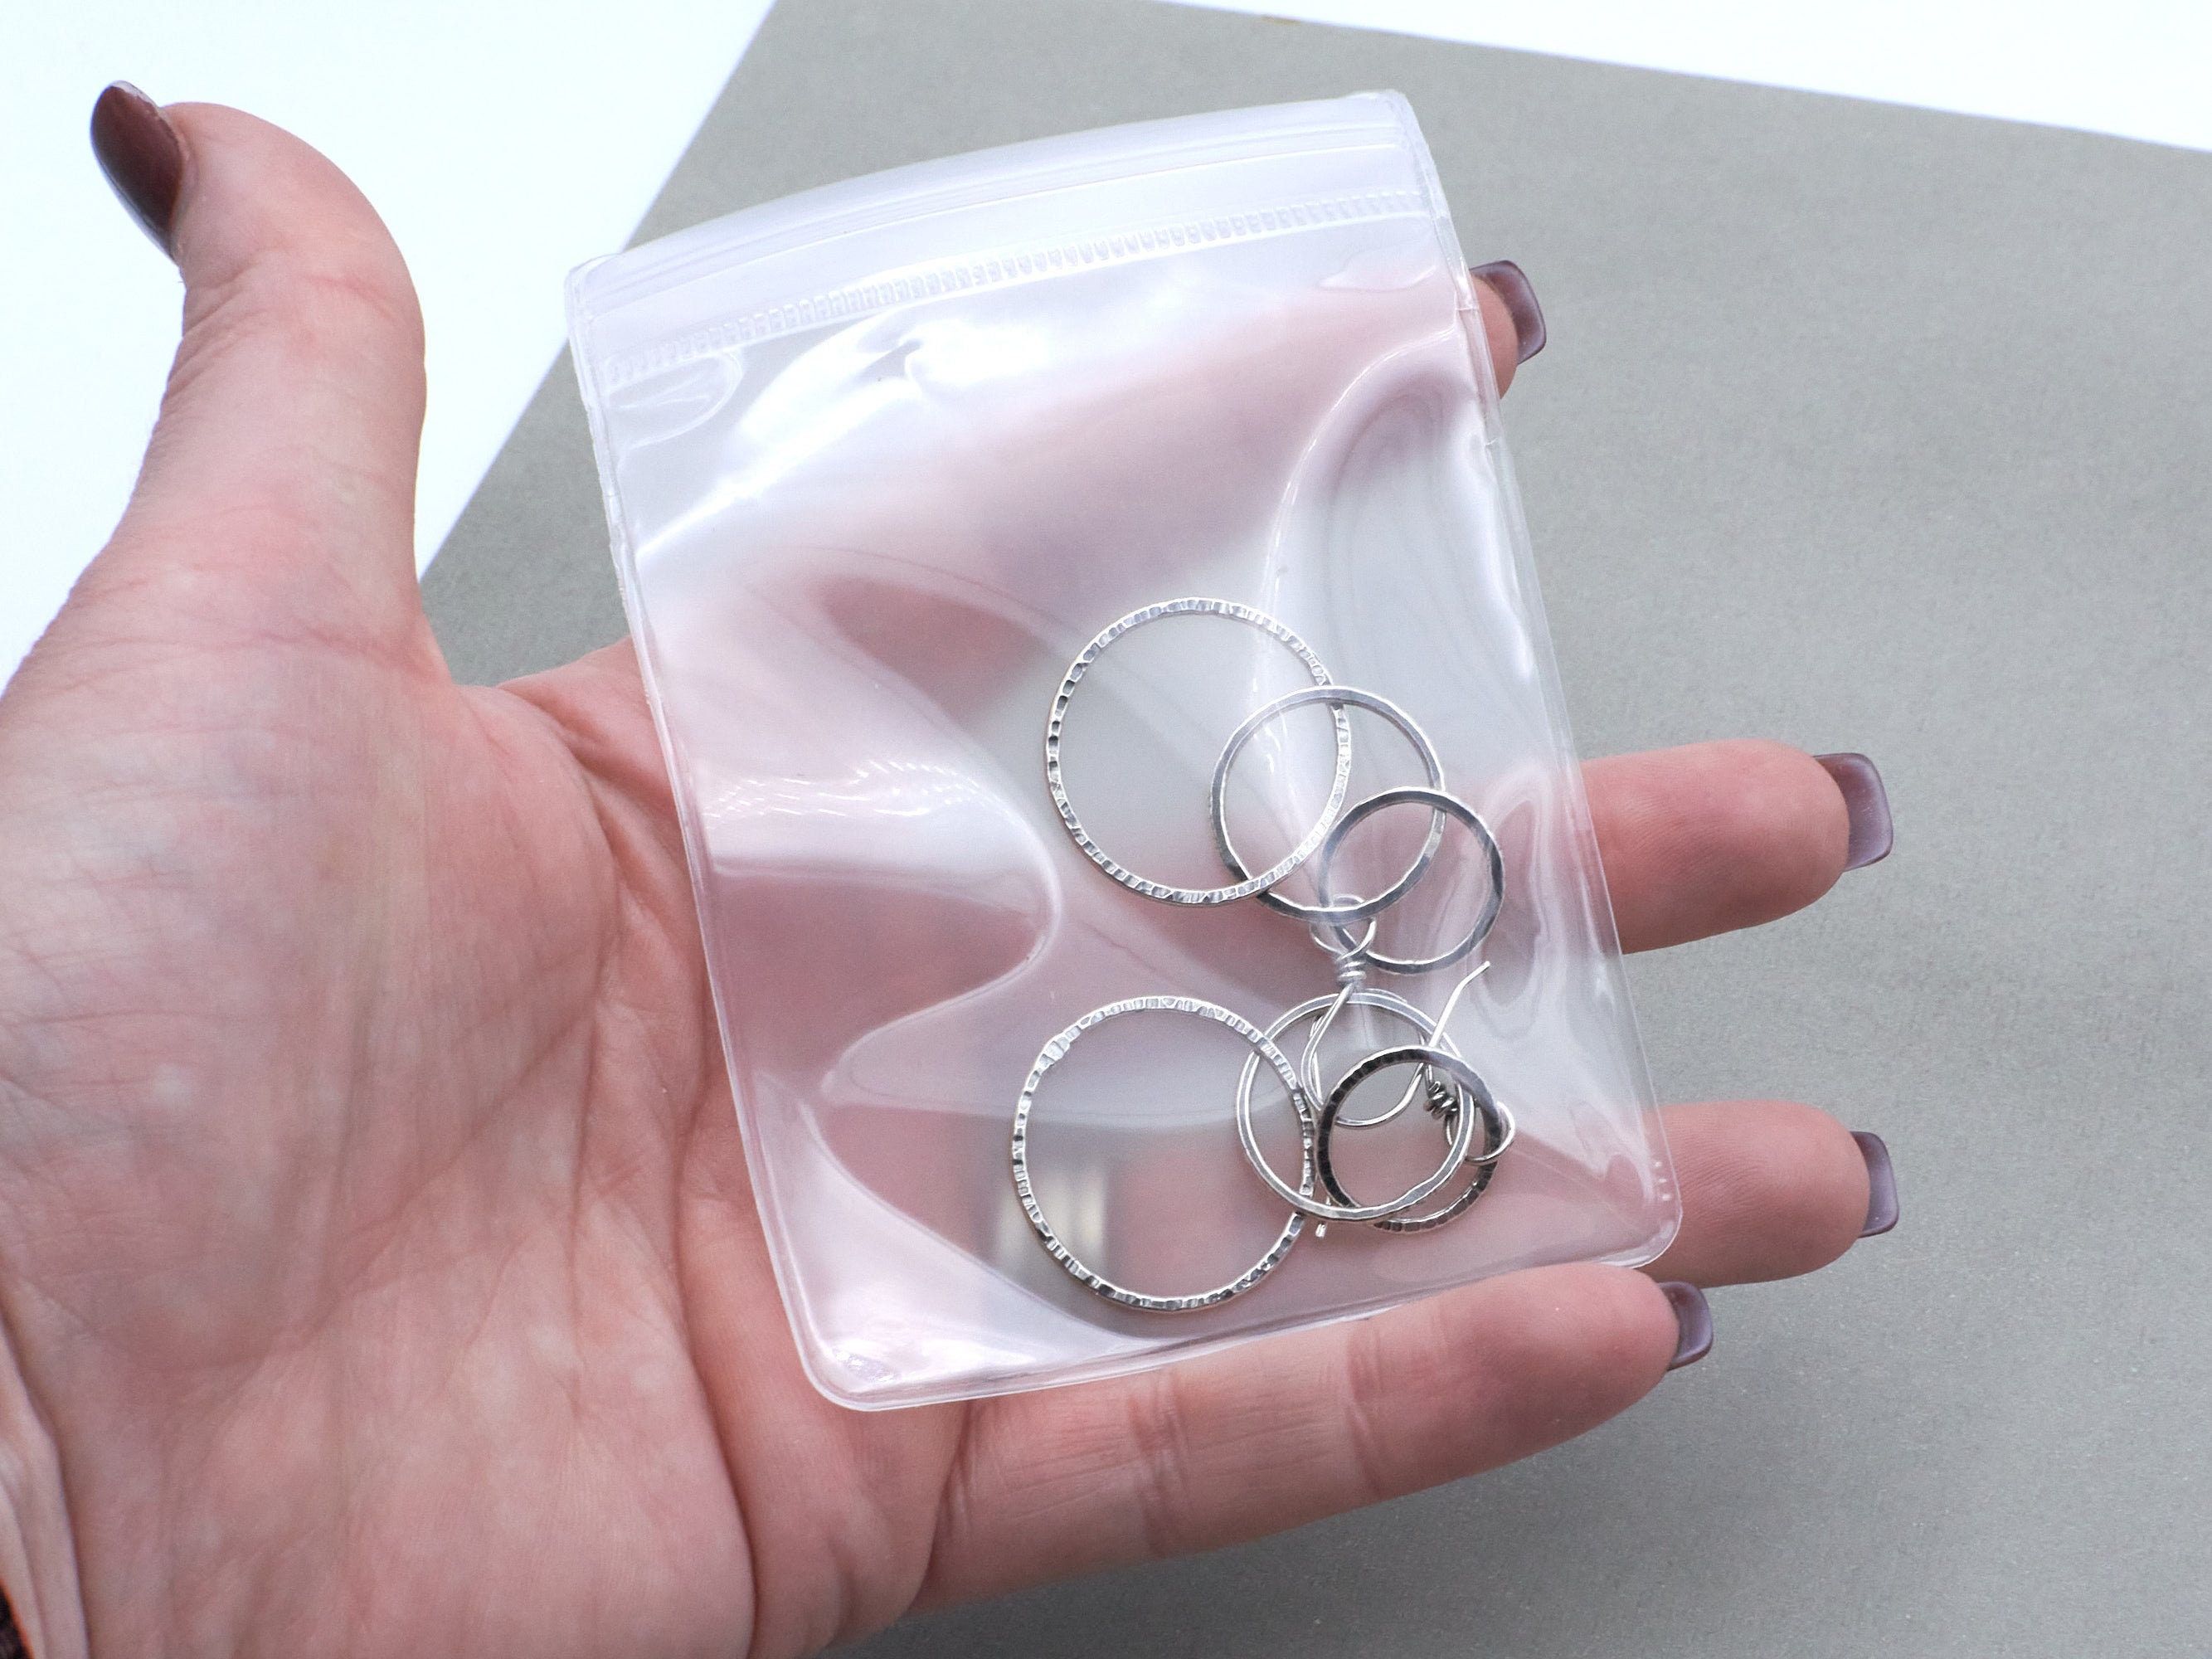 WEDDINGHELPER Jewelry Bags Small Self-Sealing Plastic Zip Clear Bags PVC  Transparent Lock Bag for Storing Bracelets Rings Earrings Ziplock Pouch  (1.6